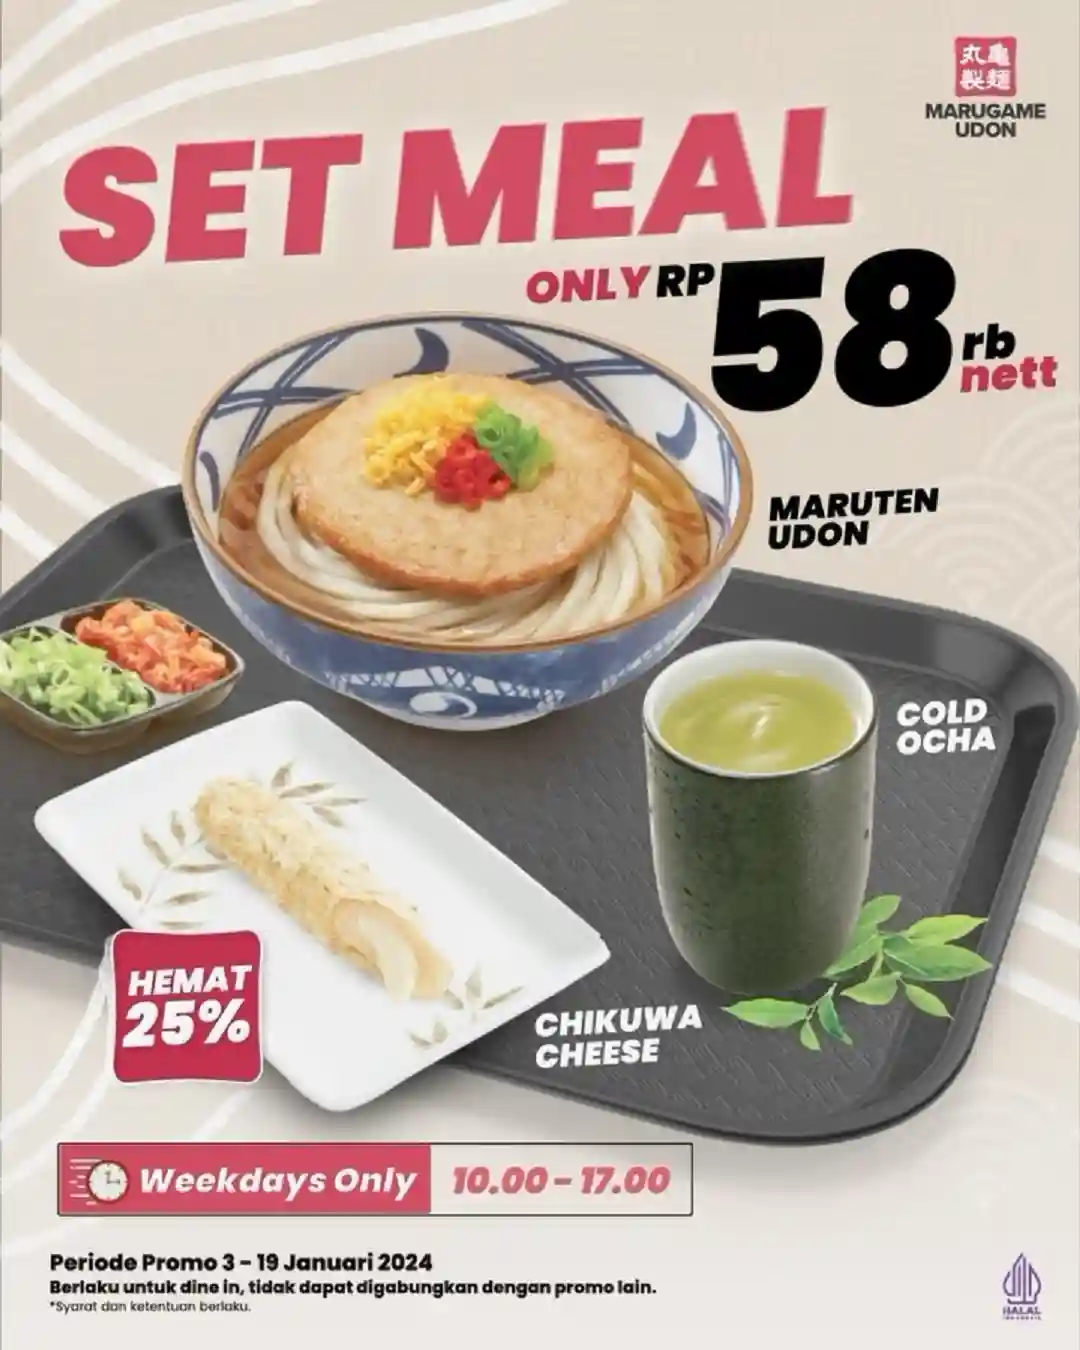 Promo Marugame Udon Set Meal Hanya 58Ribu